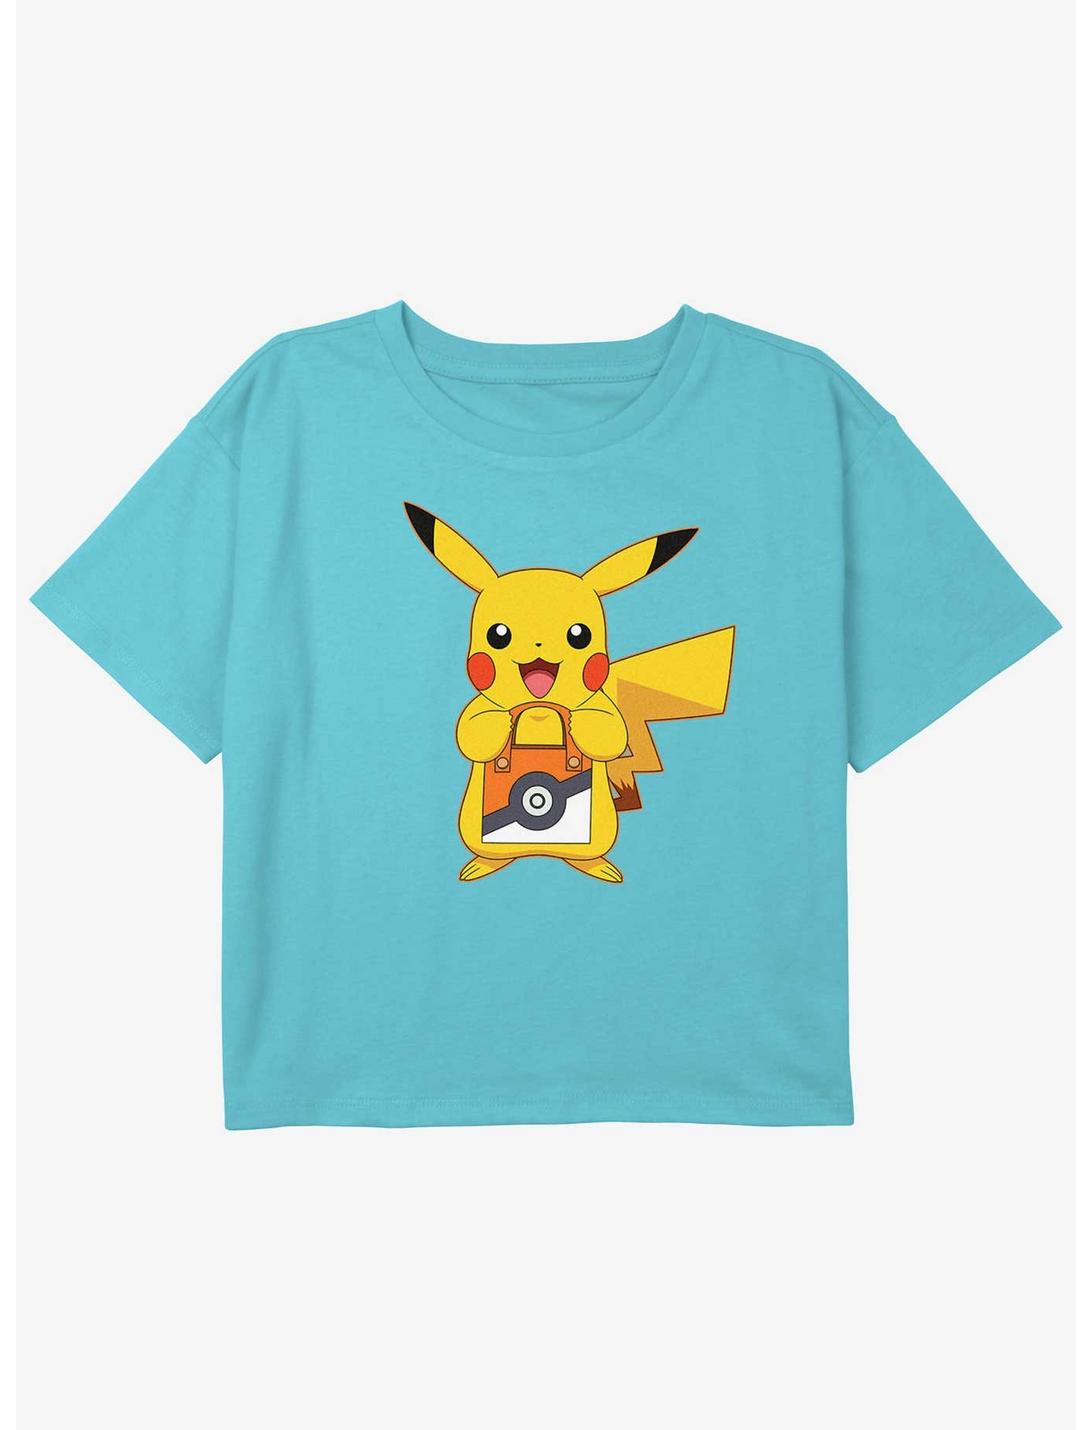 Pokemon Pikachu Treat Girls Youth Crop T-Shirt, BLUE, hi-res